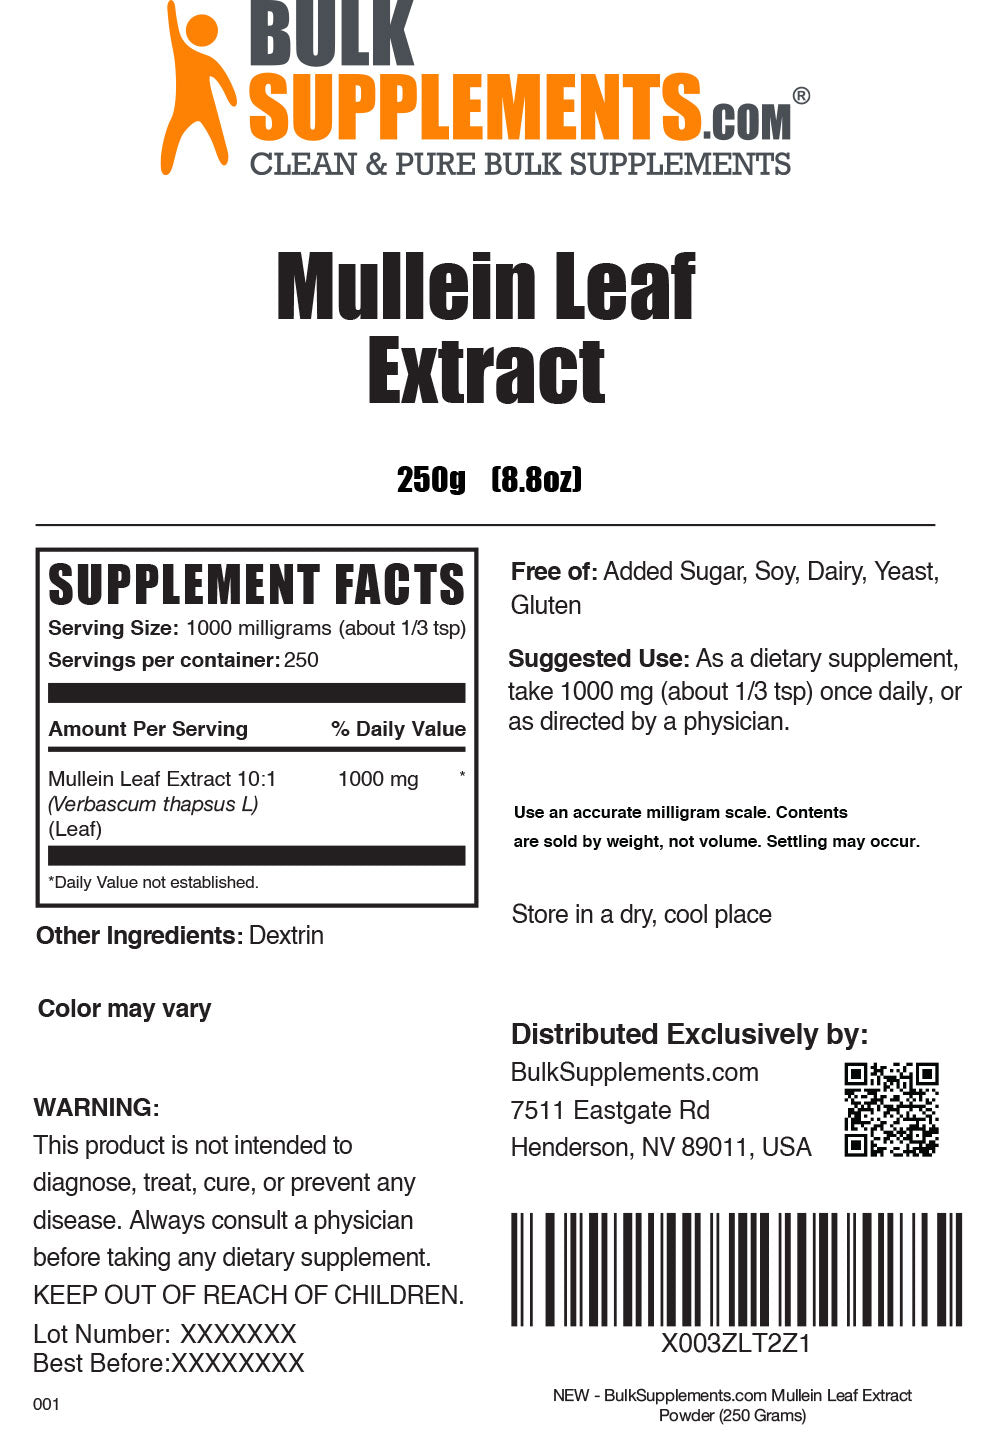 Mullein leaf extract powder label 250g